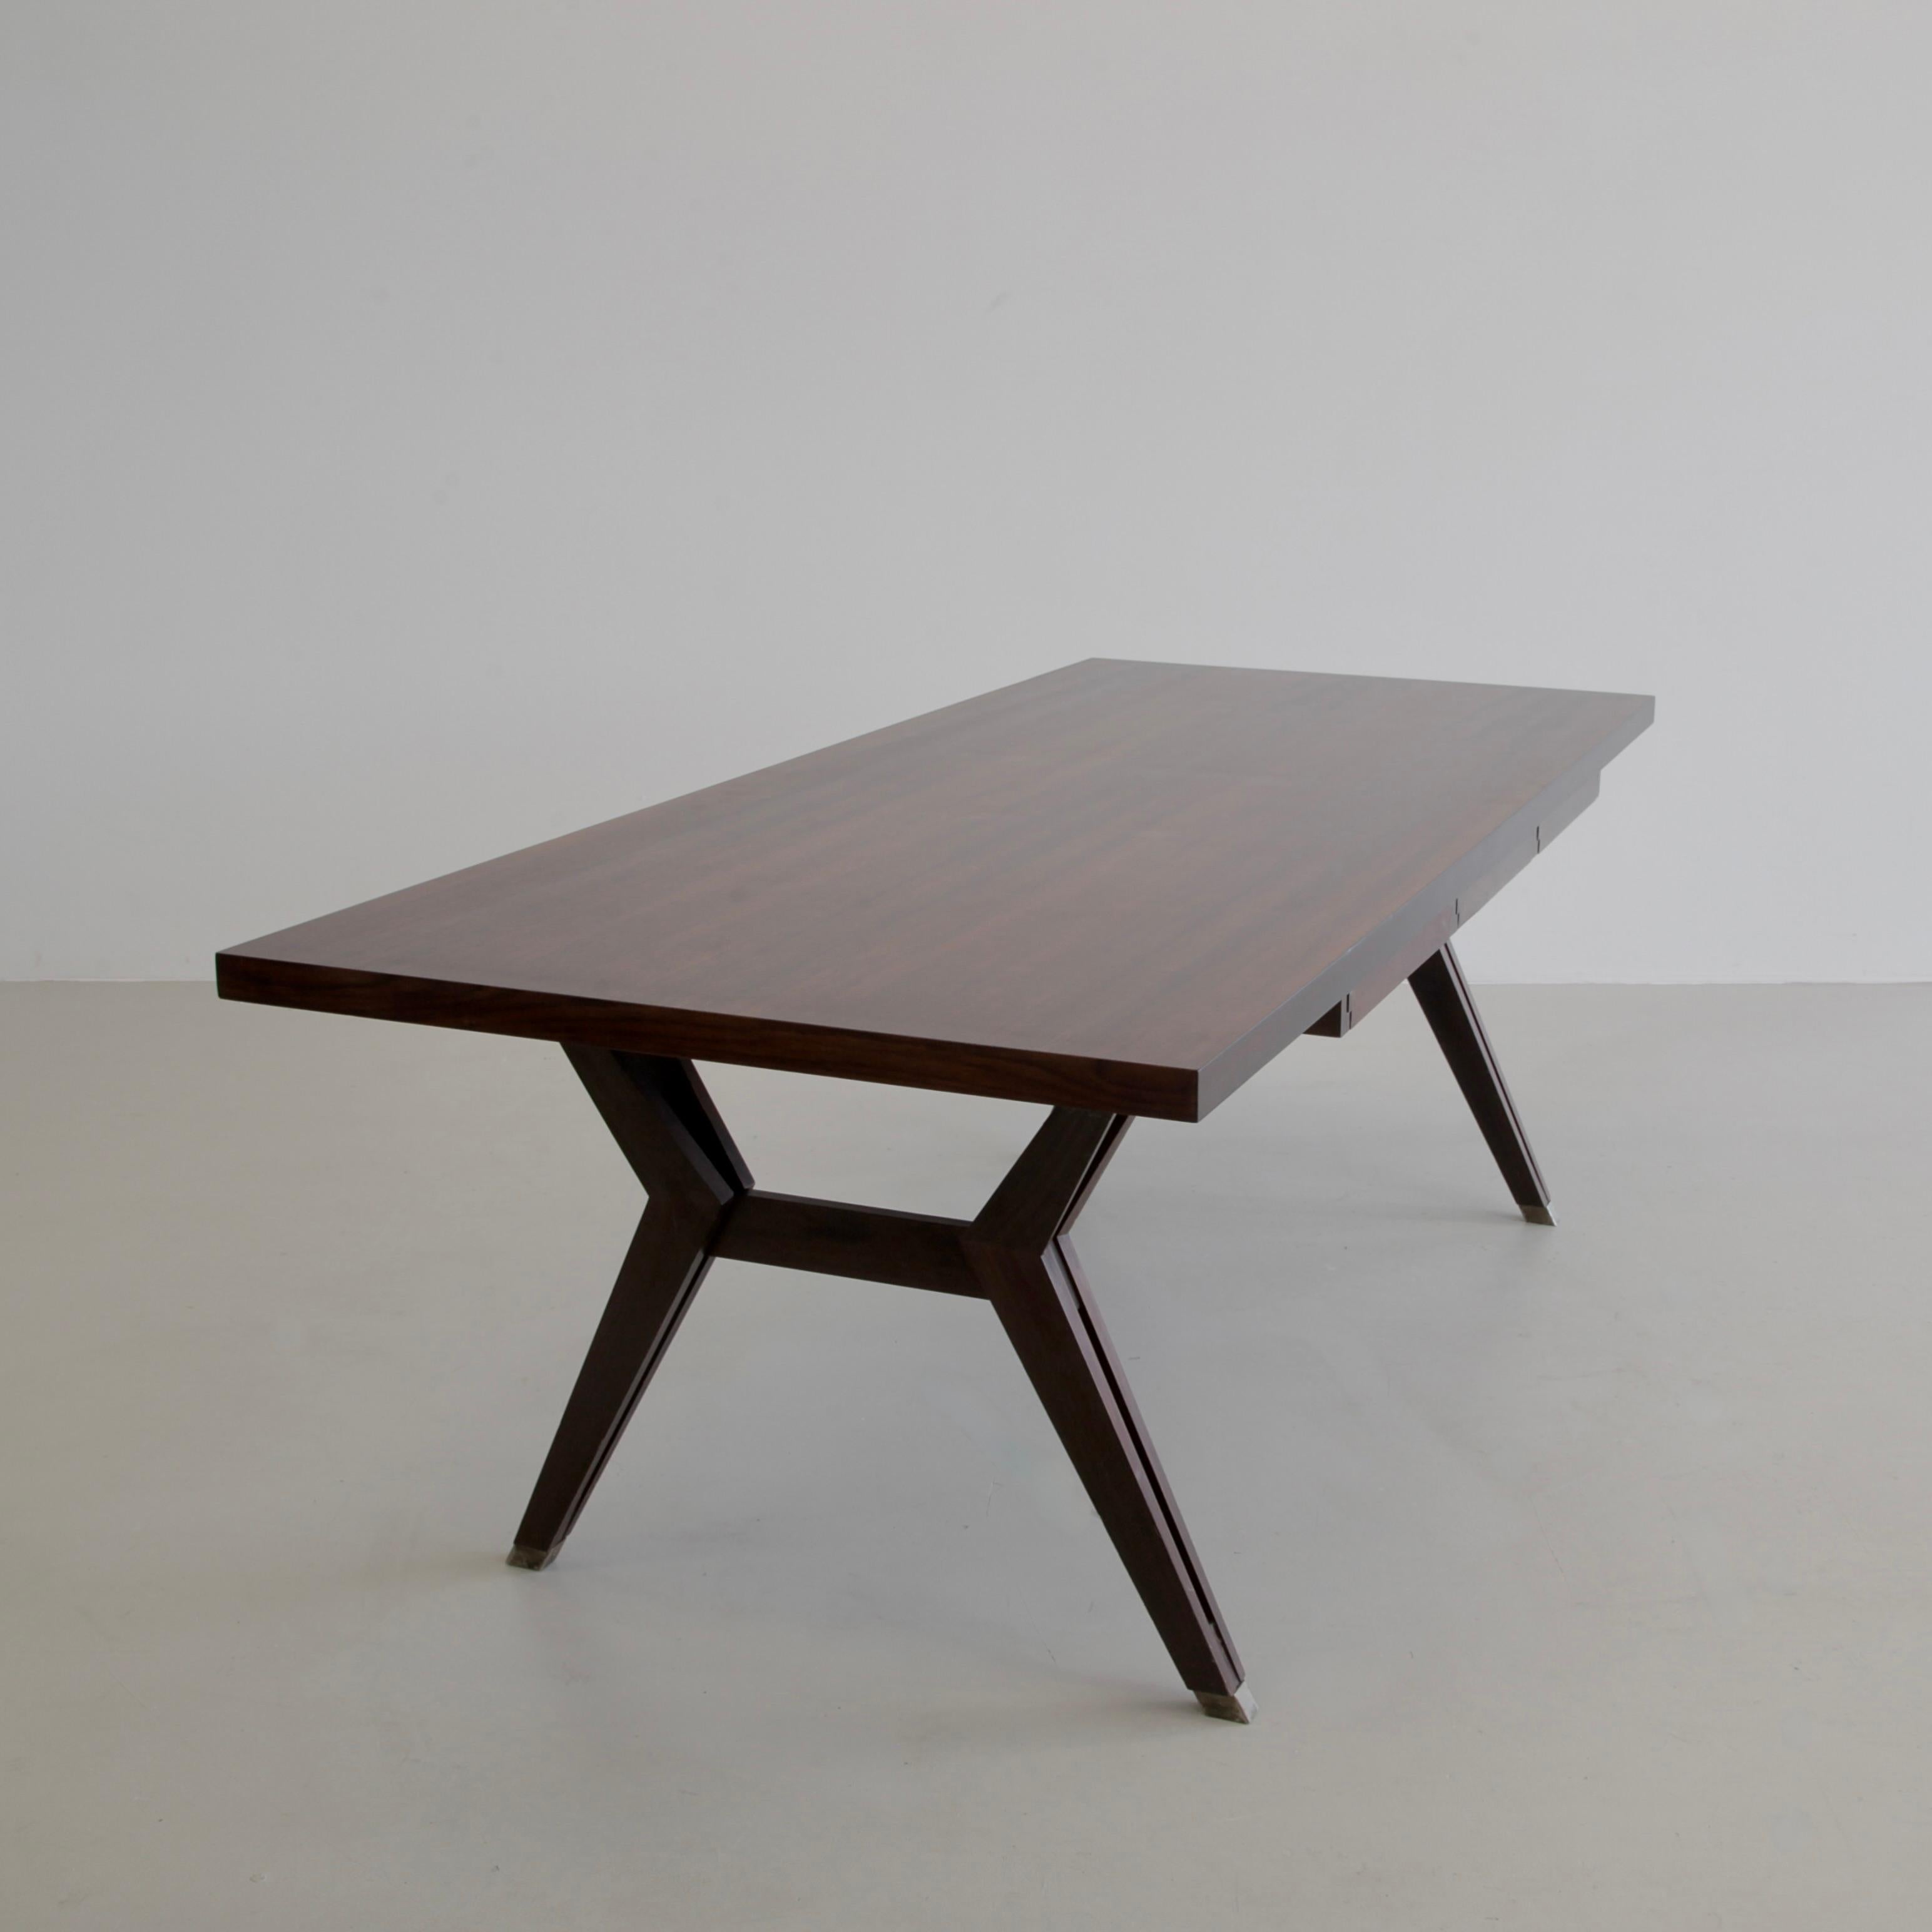 Wood Table 'Terni' Designed by Ico Parisi, Italy, MIM Roma, 1958